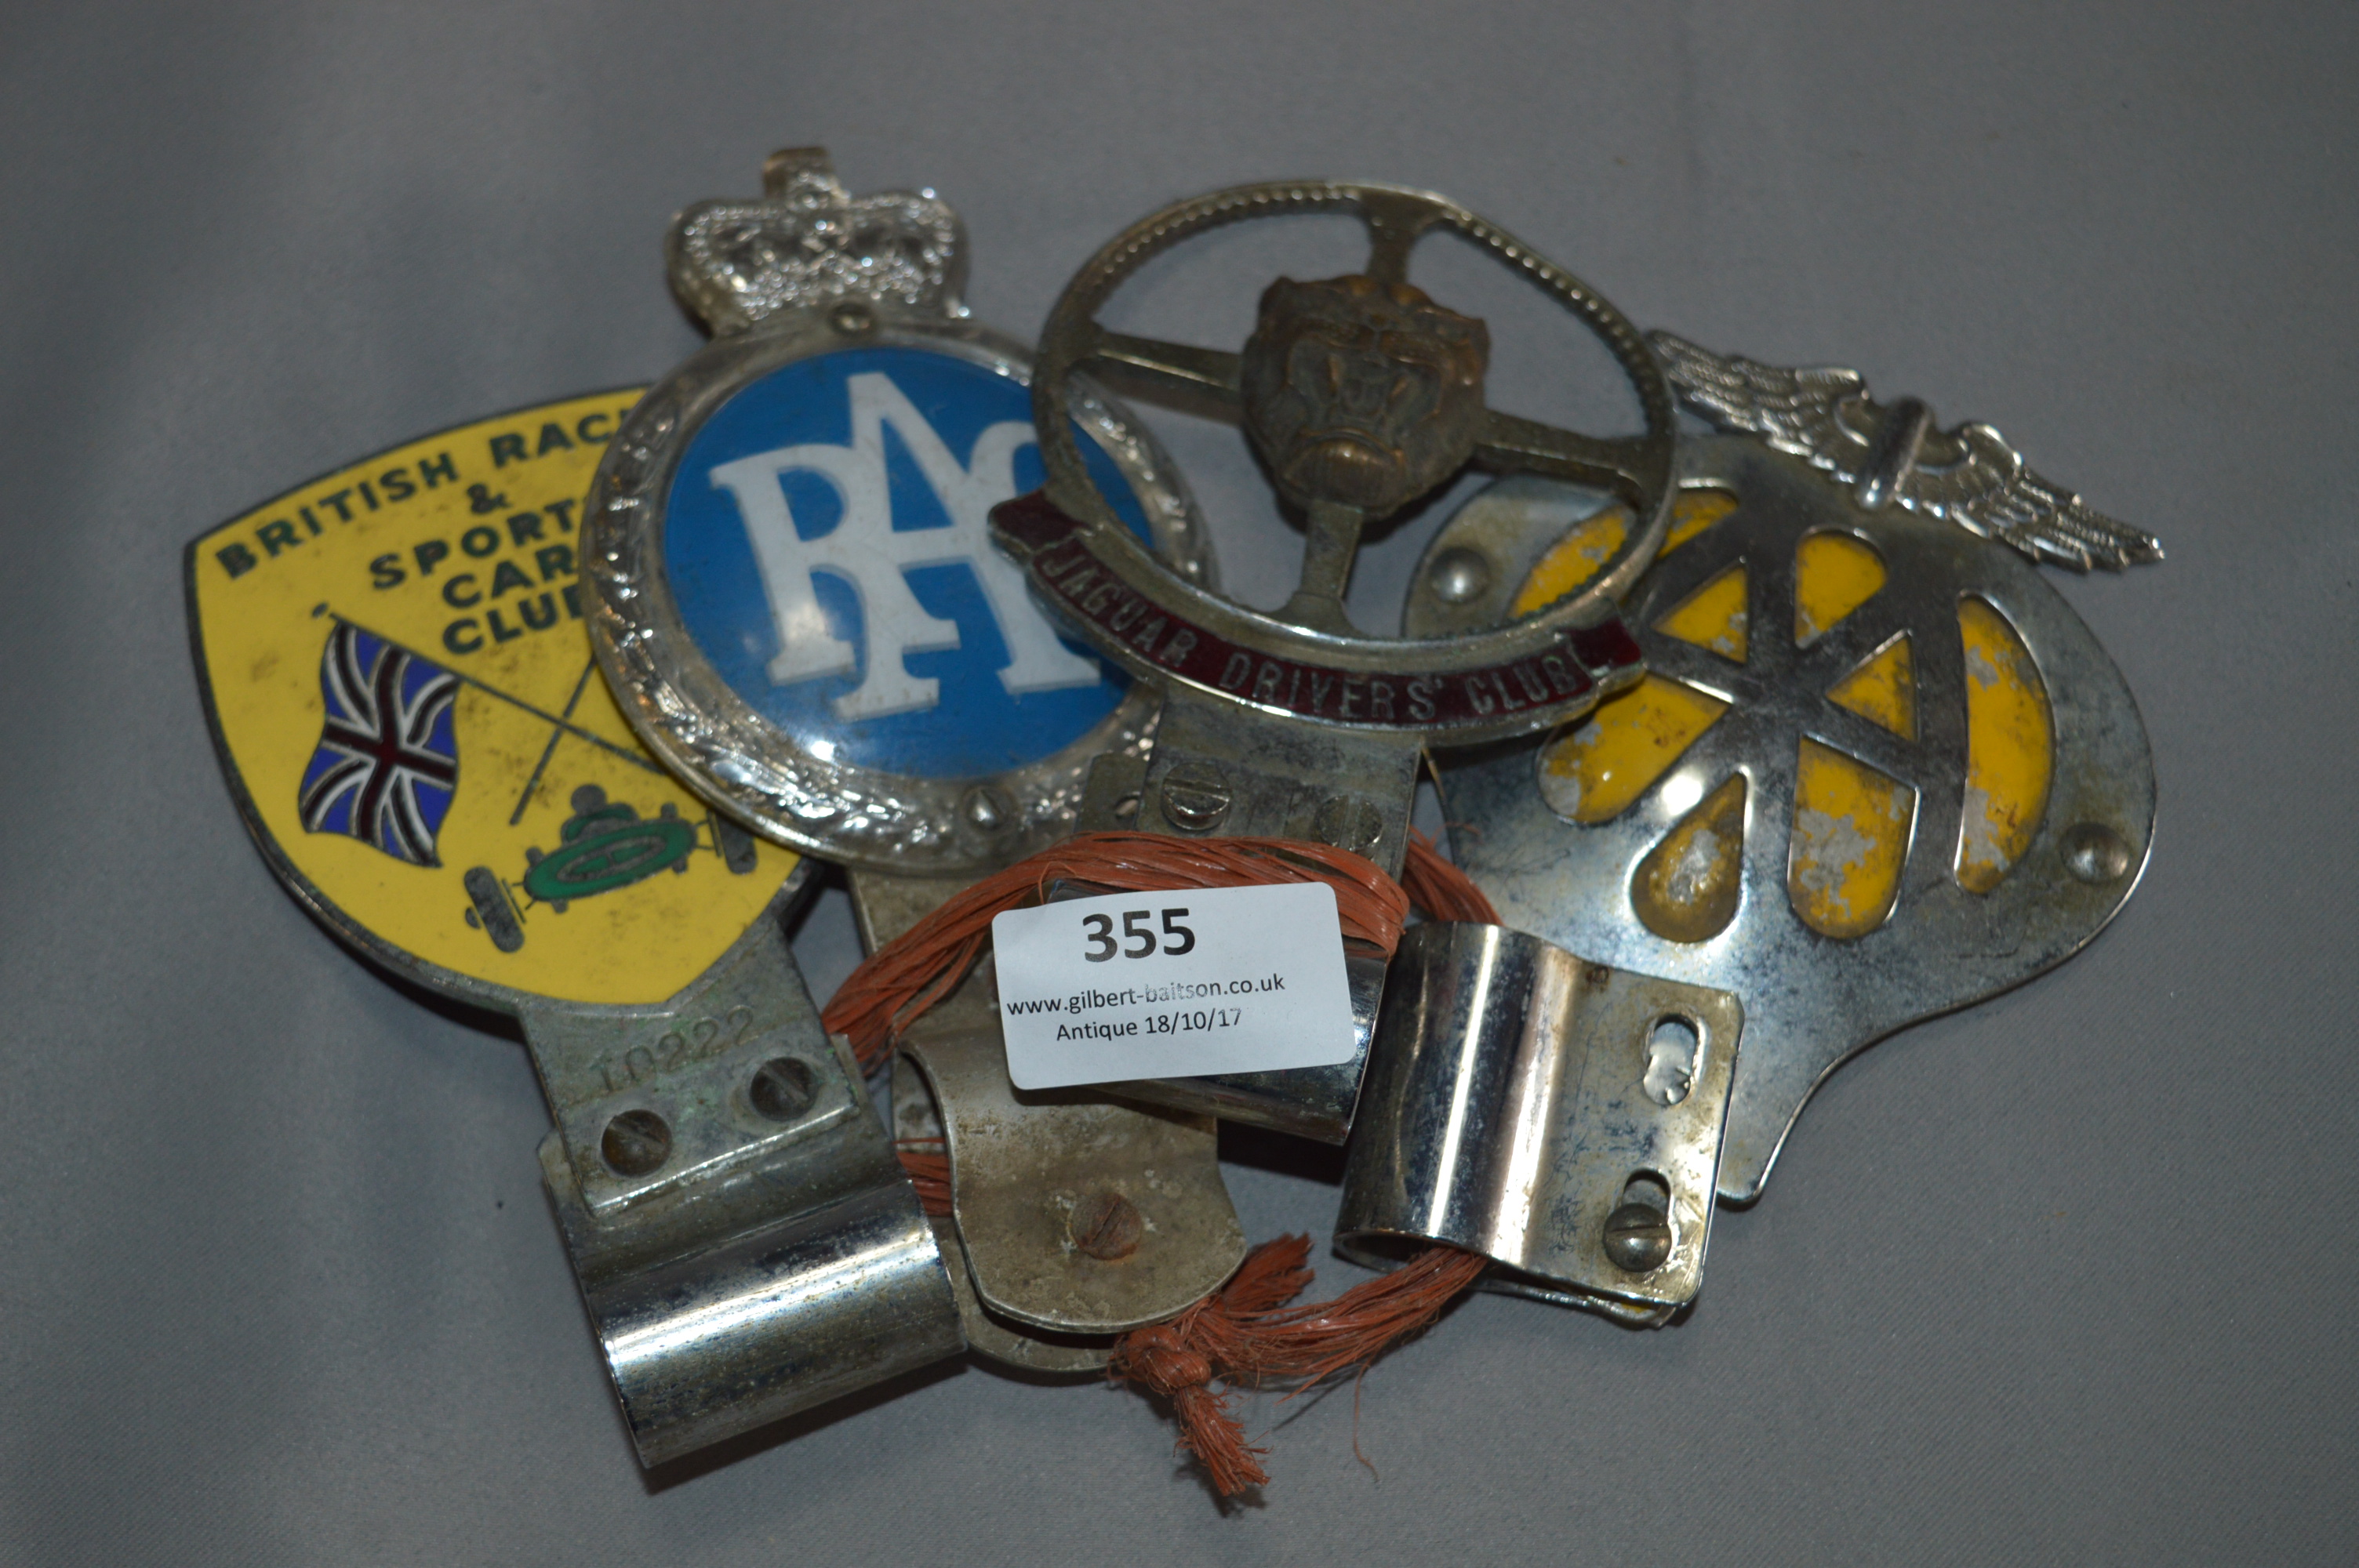 Car Badges including Jaguar Drivers Club, British Racing, AA and RAC